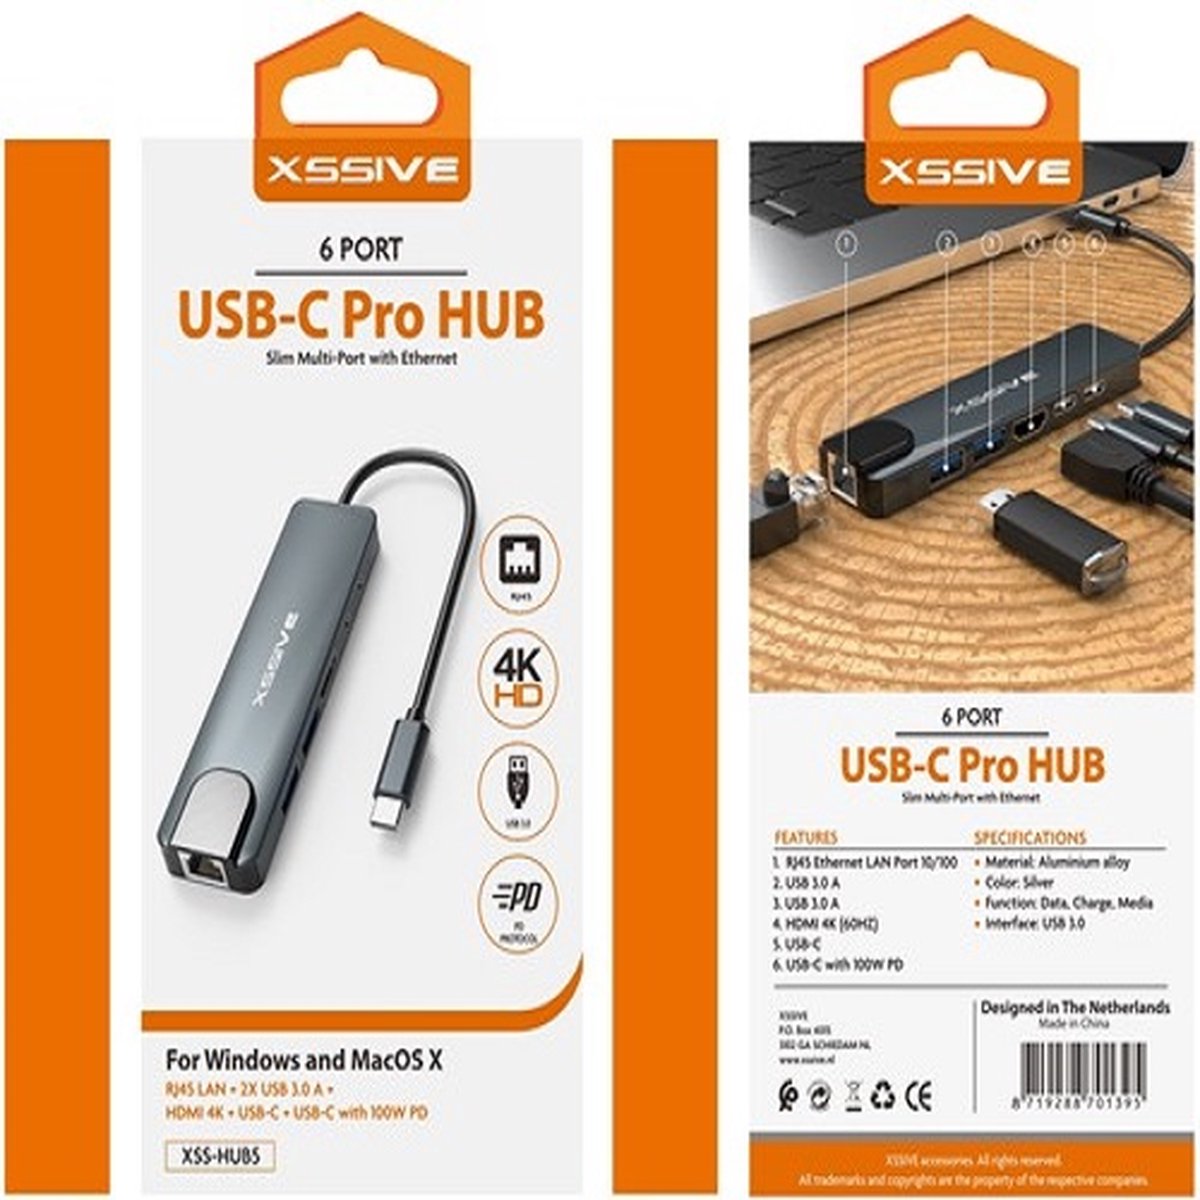 Xssive 6in1 USB-C Pro Hub XSS-HUB5